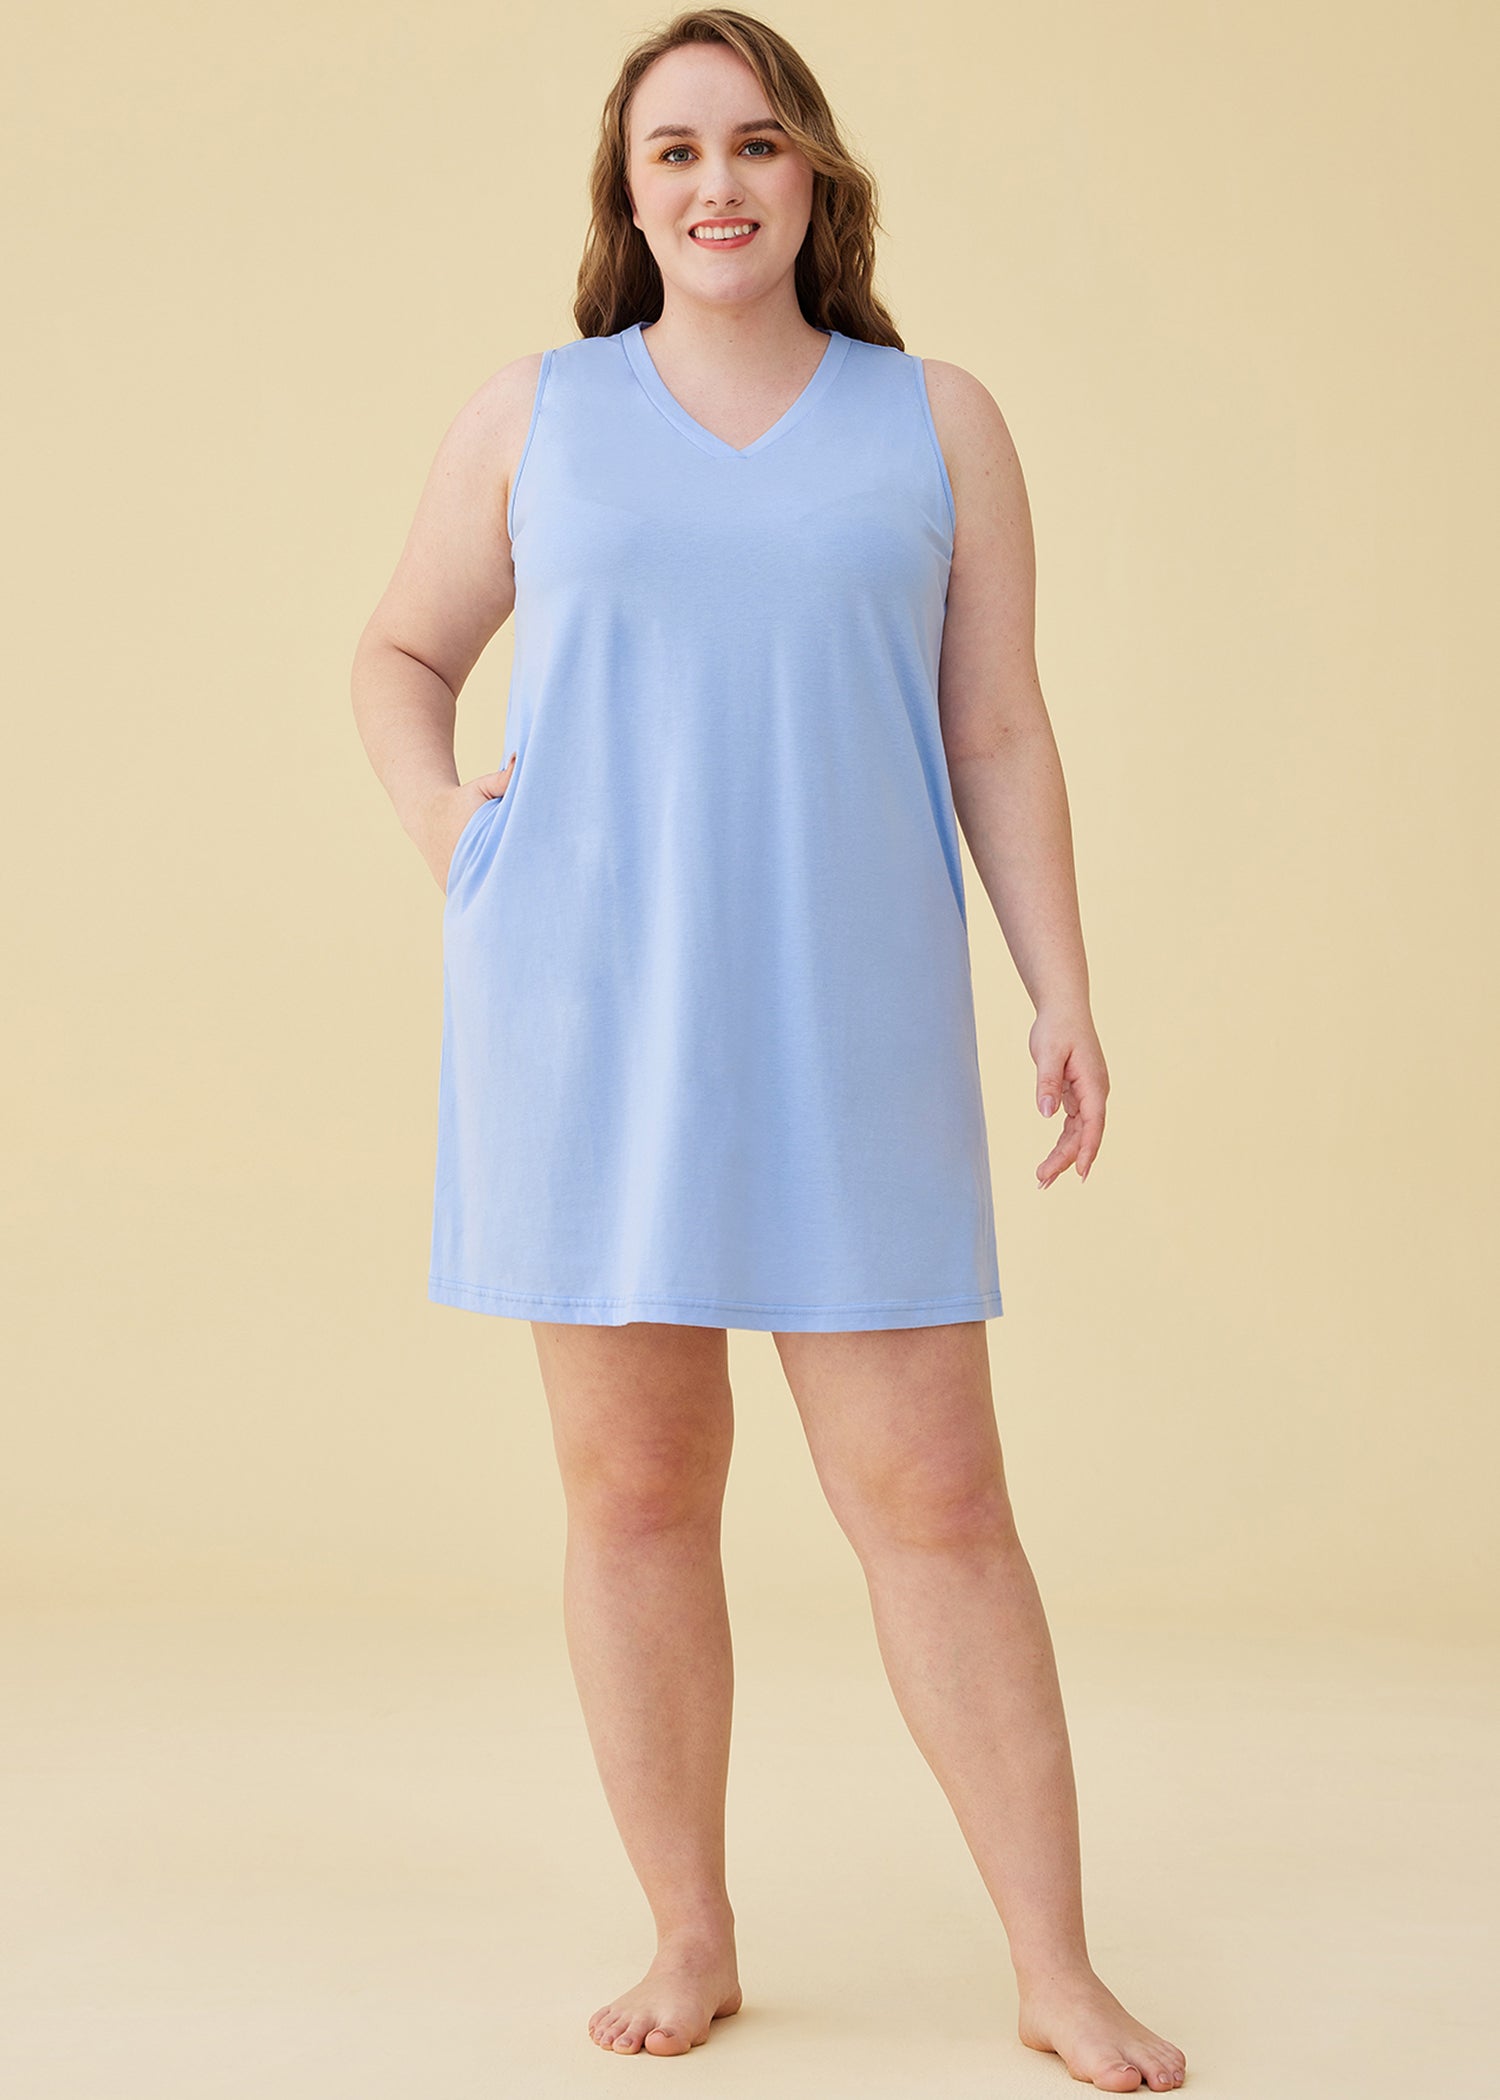 Women's Cotton Sleeveless Short Nightgown Soft Sleep Shirt with